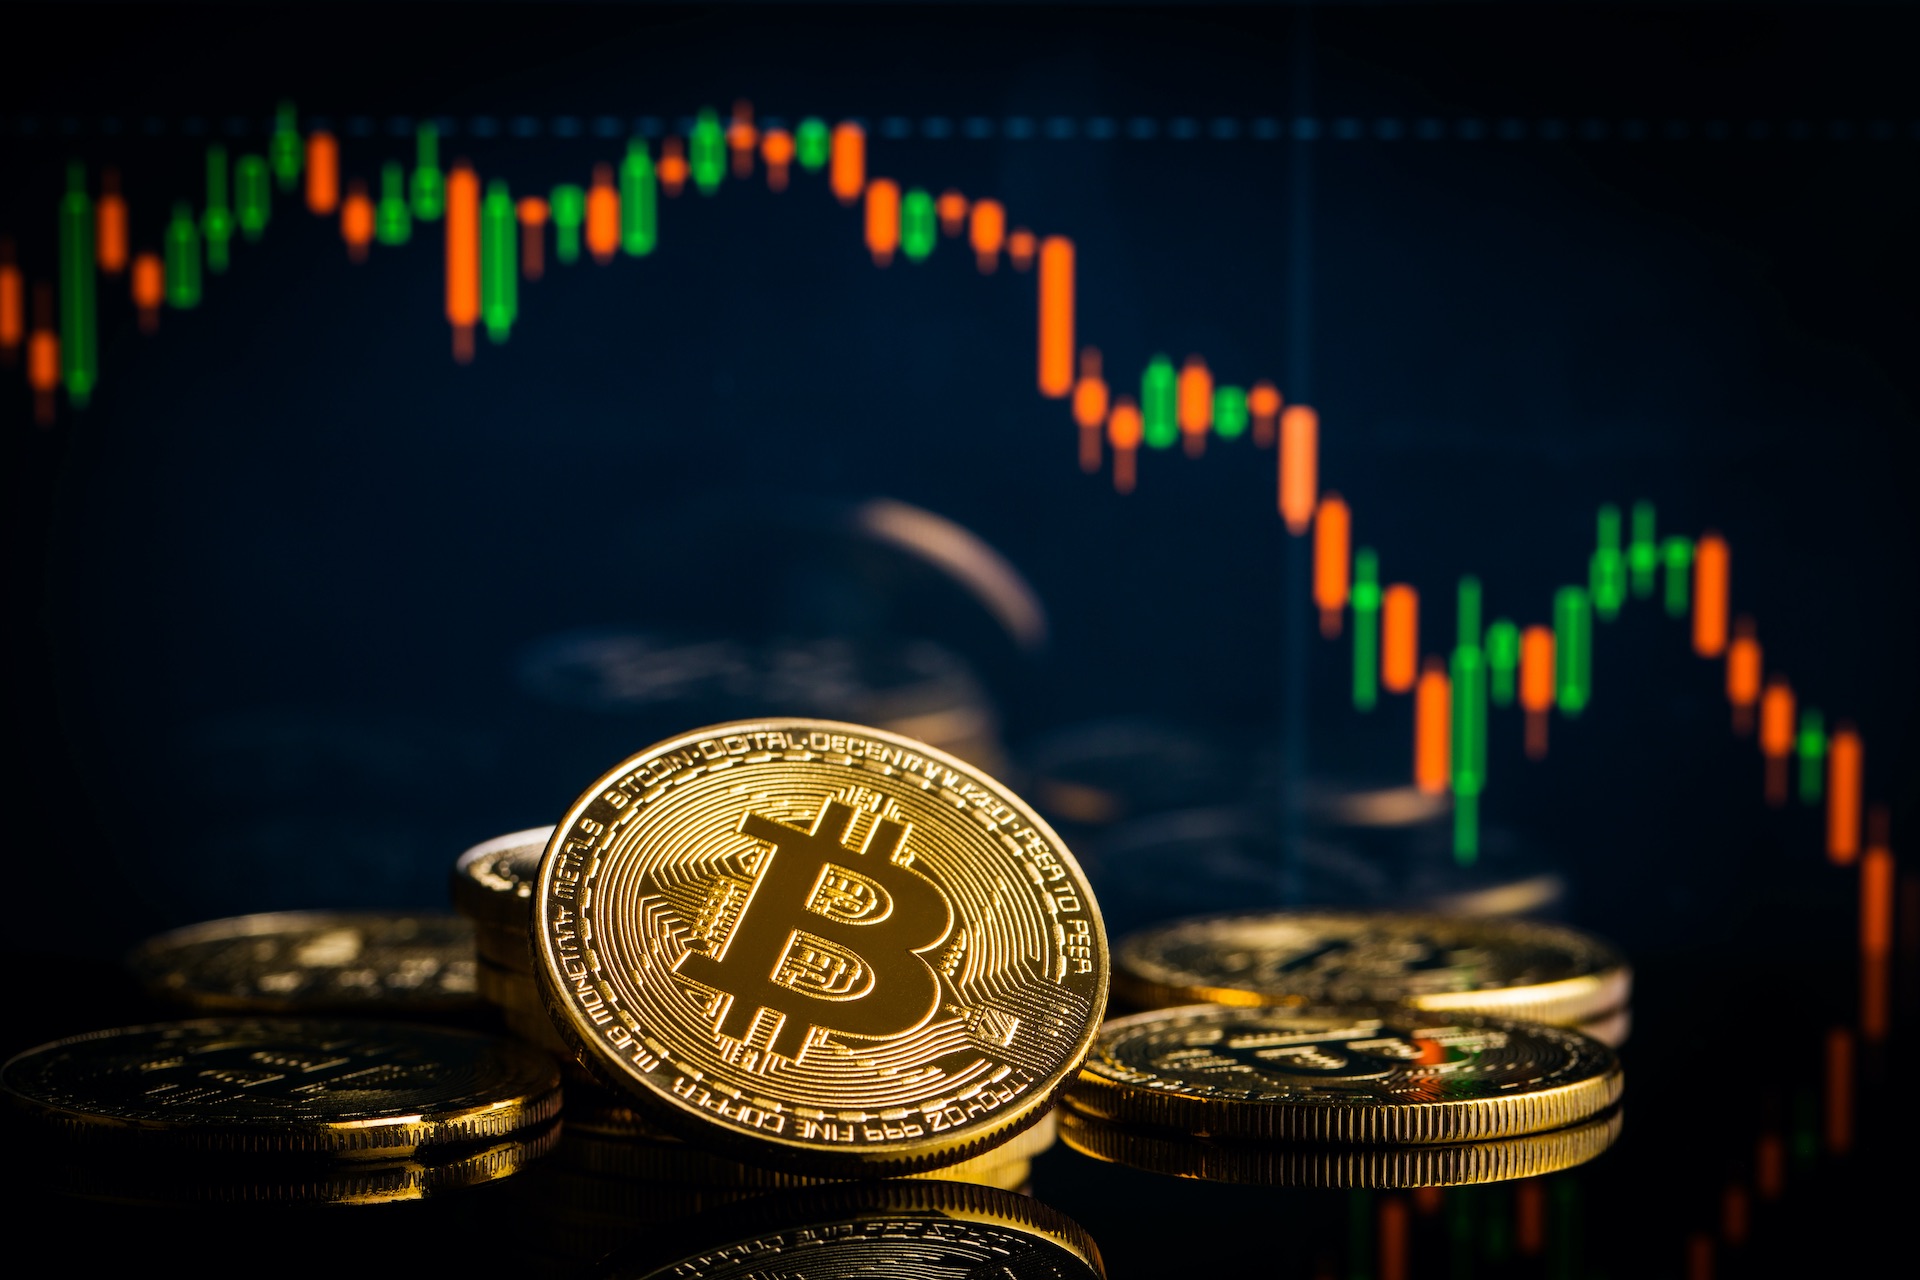 Bitcoin plummets below K reversing 2021 gains as crypto risk escalates